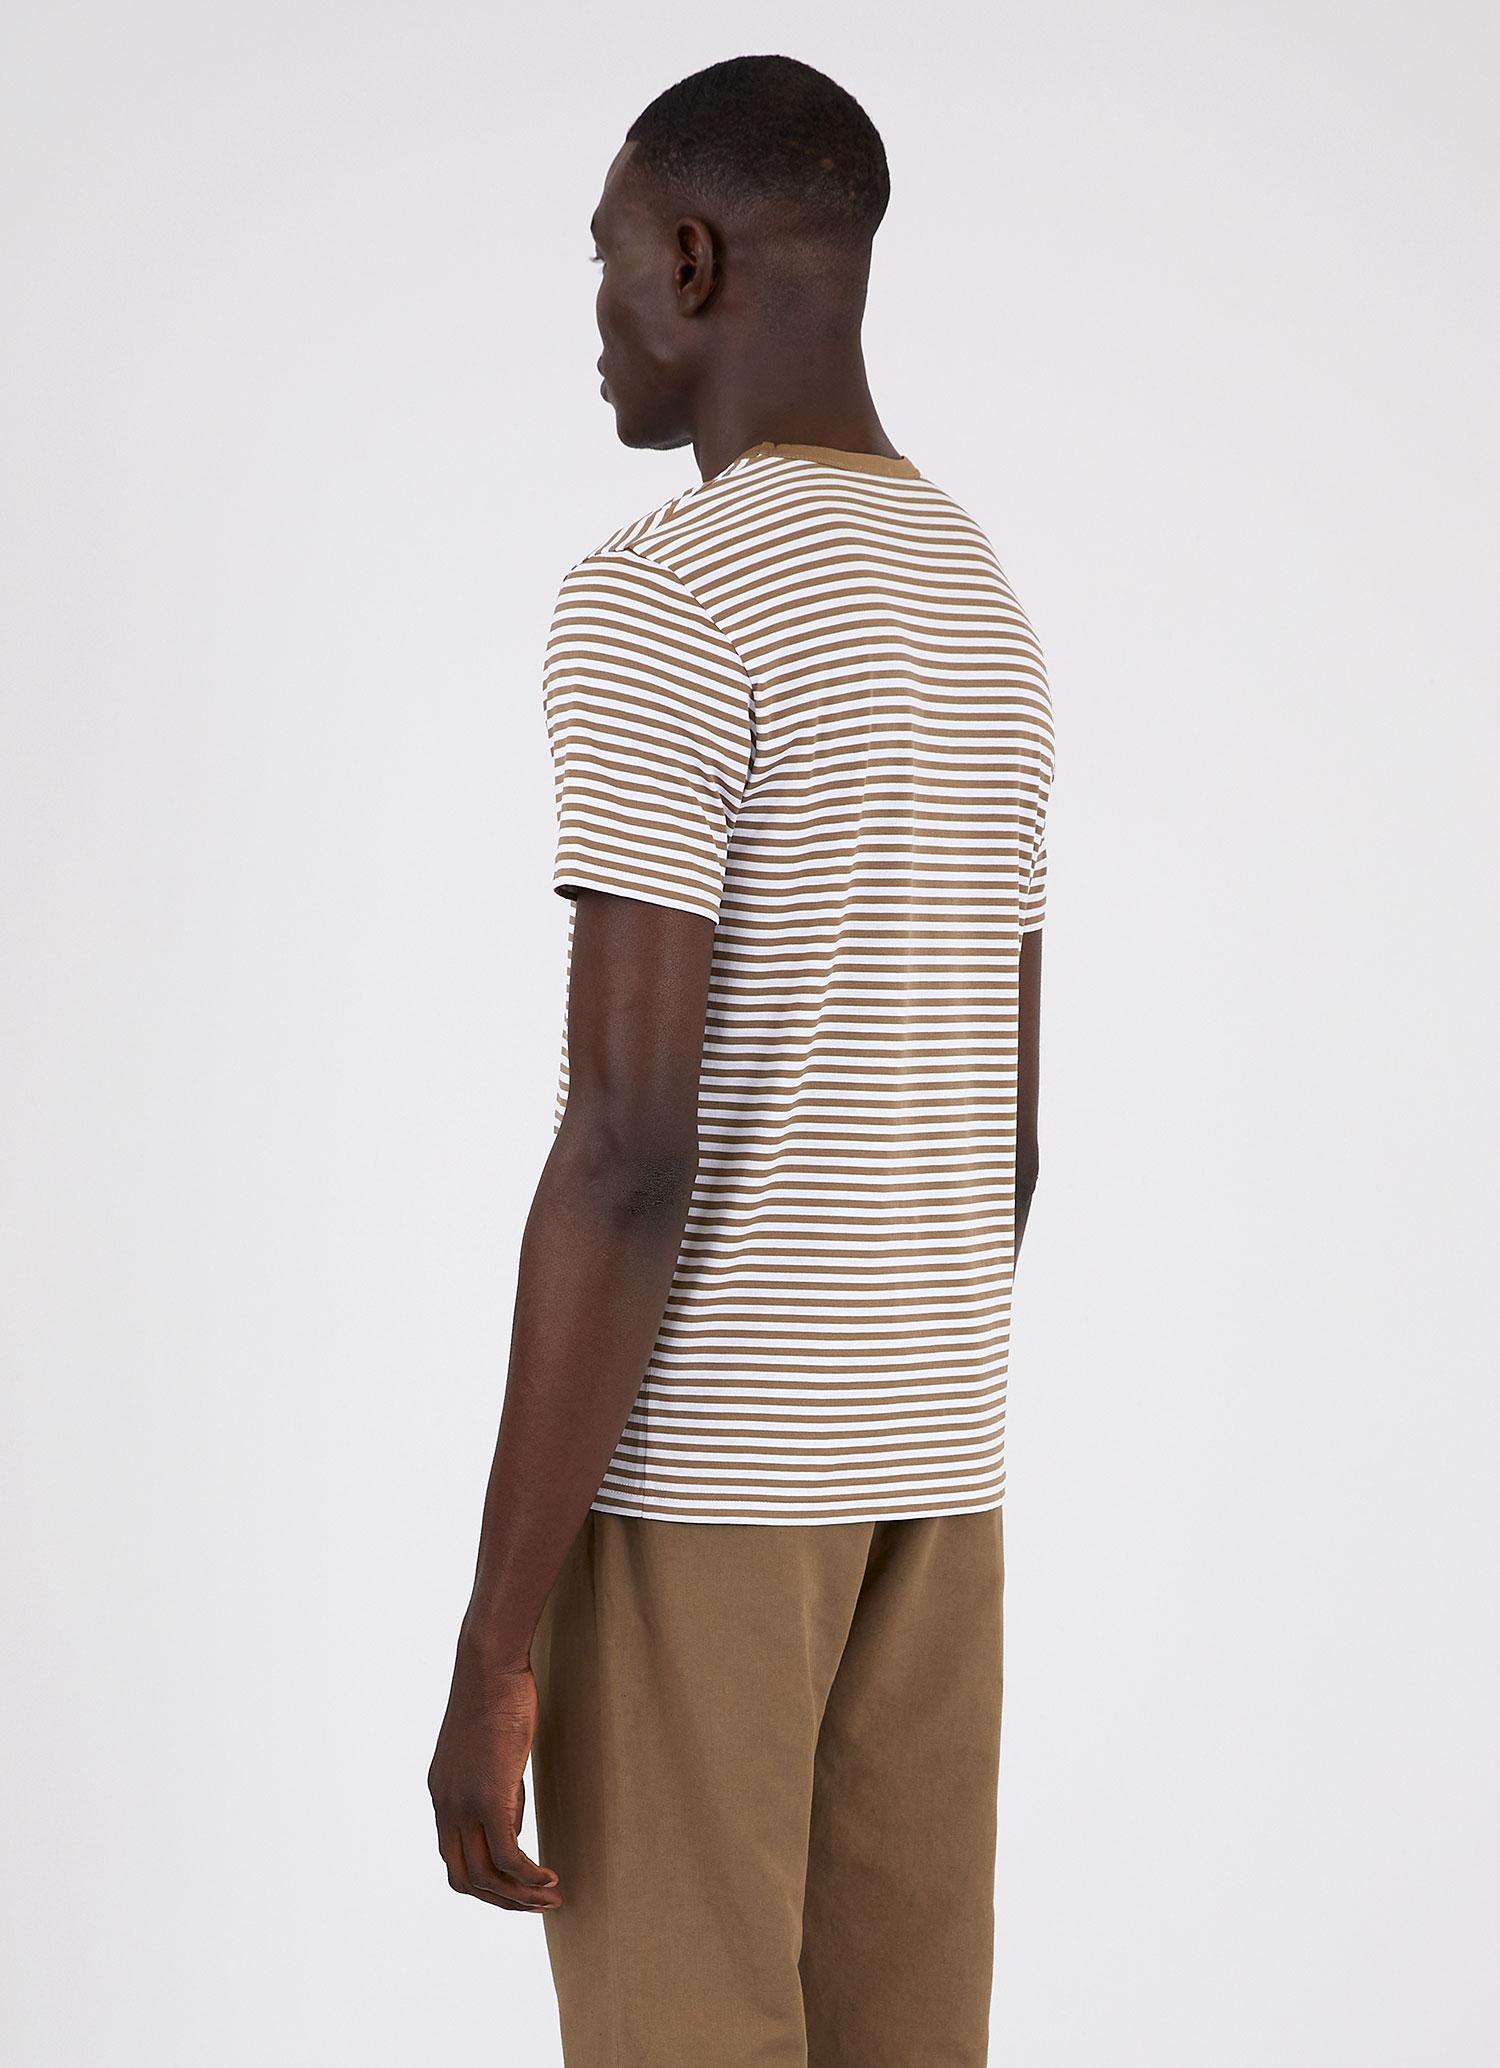 Men's Classic T-shirt in Dark Tan/White English Stripe